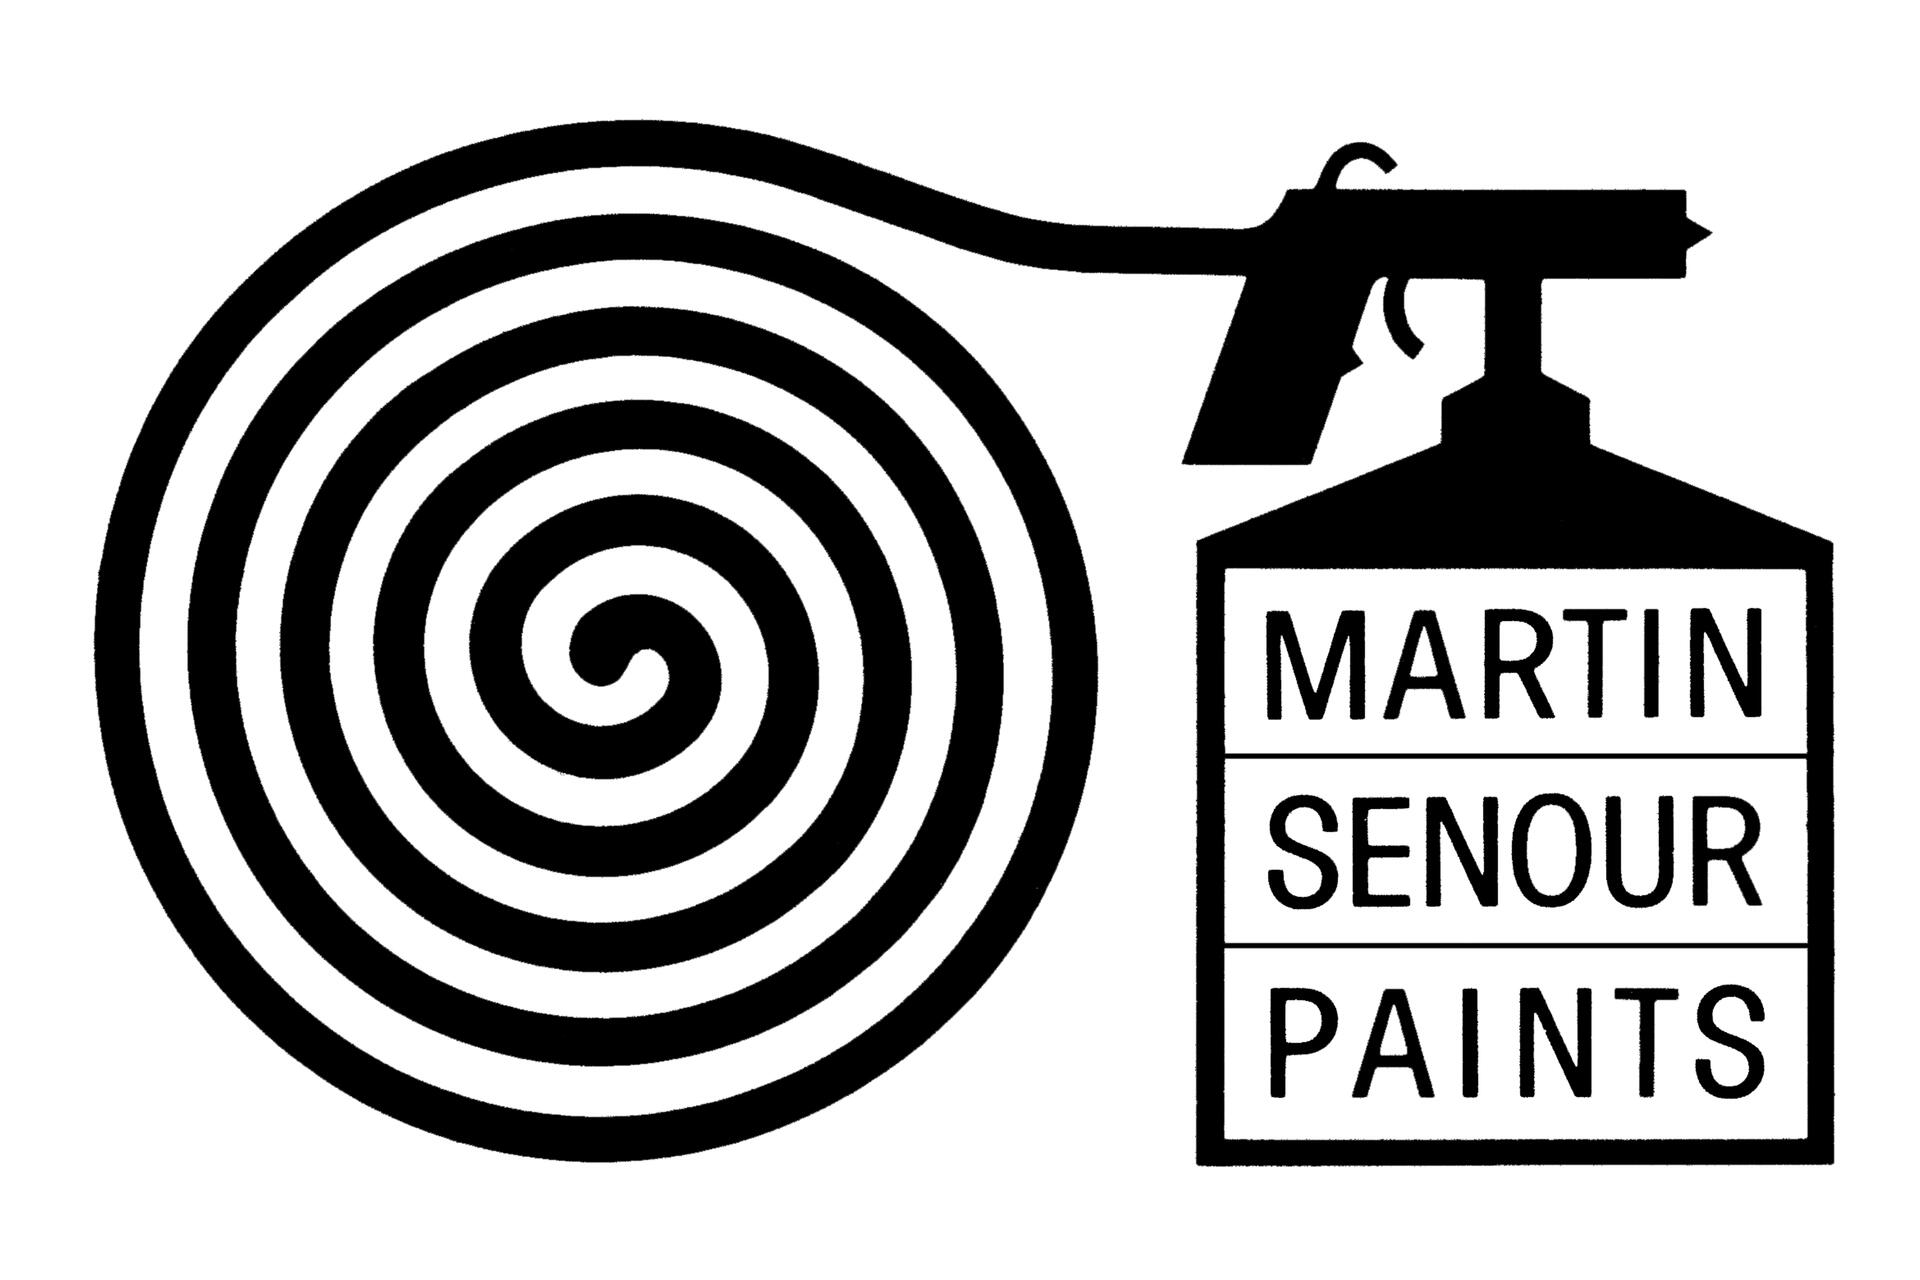 19A-88_Martin-Senour Paints Logo_Morton Goldsholl